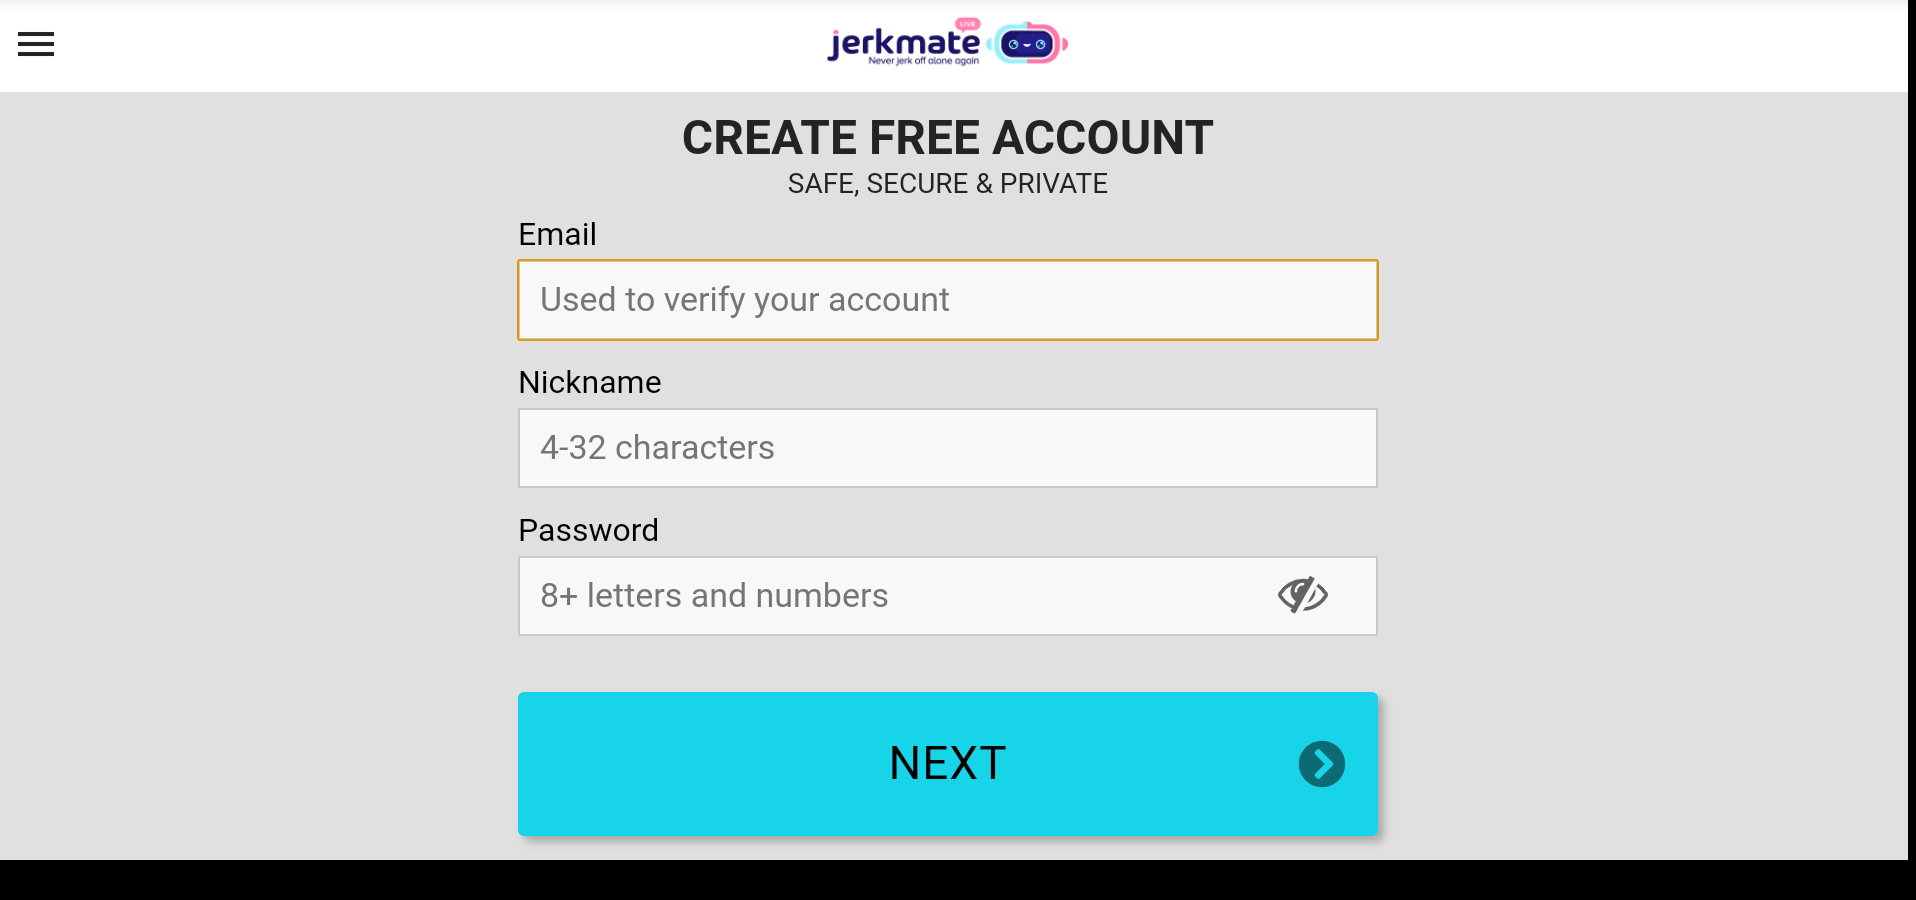 Jerkmate.com Profile Information.